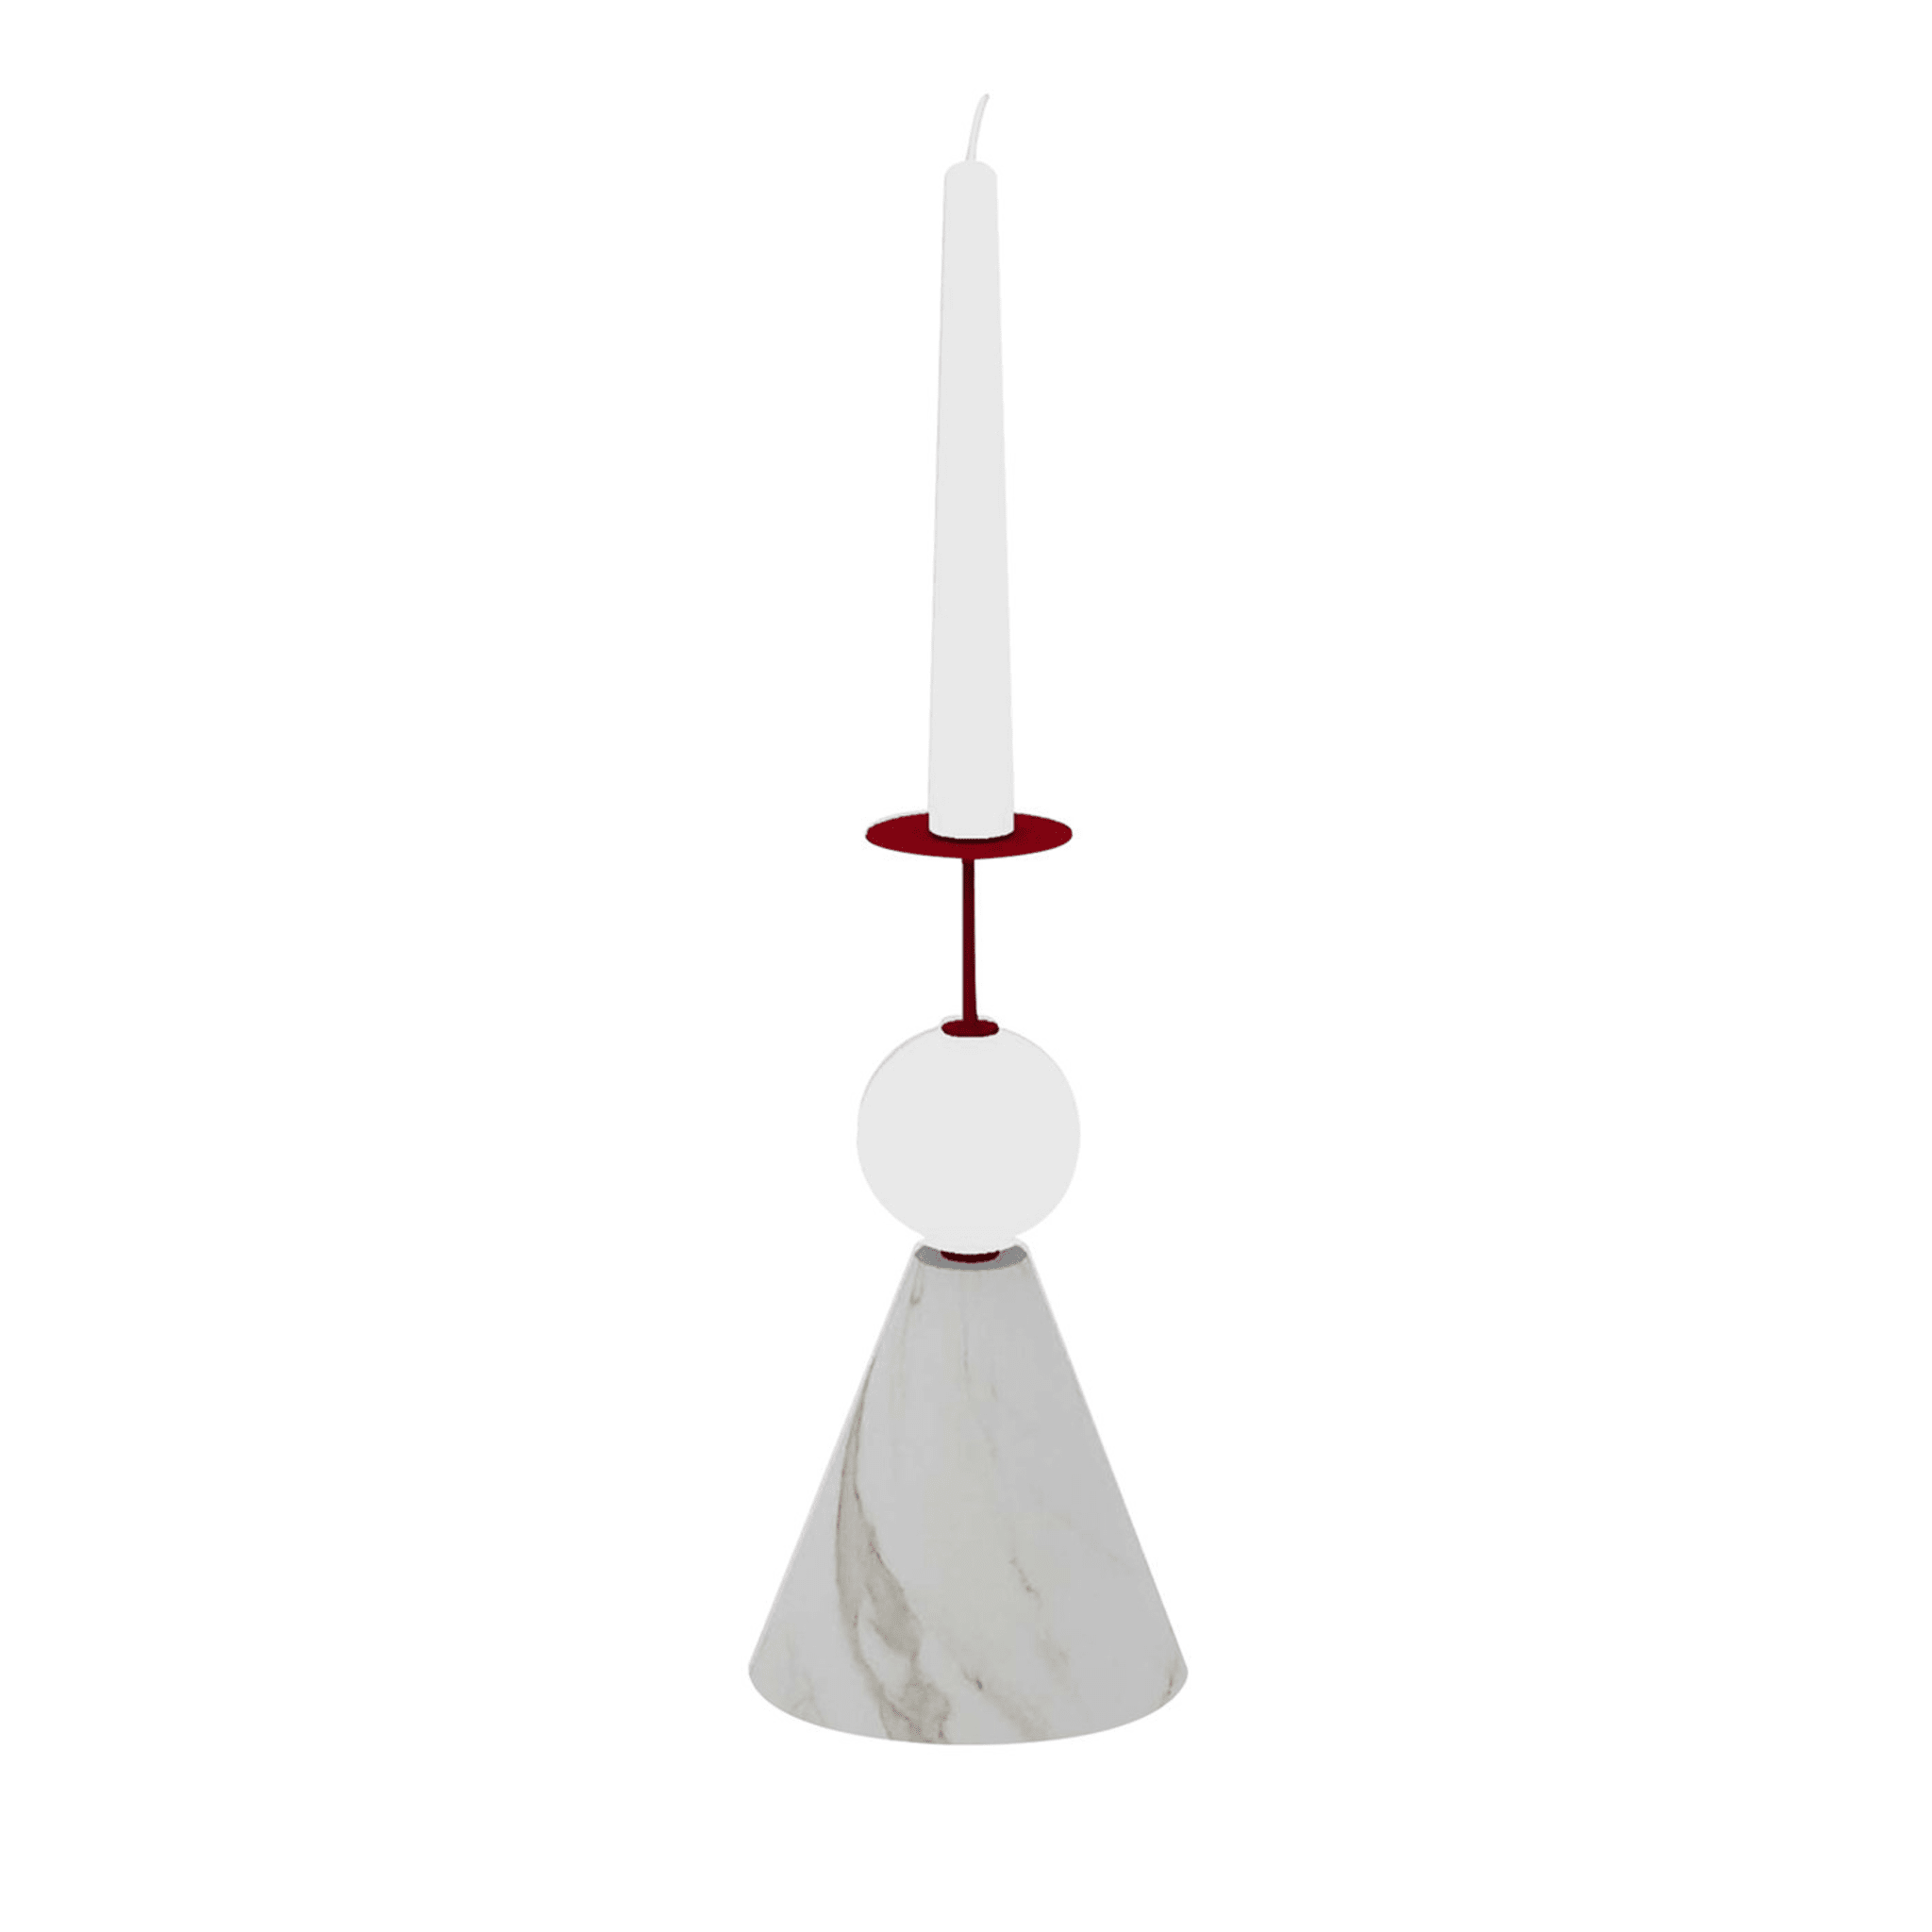 Raccontami White Carrara, Red and White Candle Holder - Main view